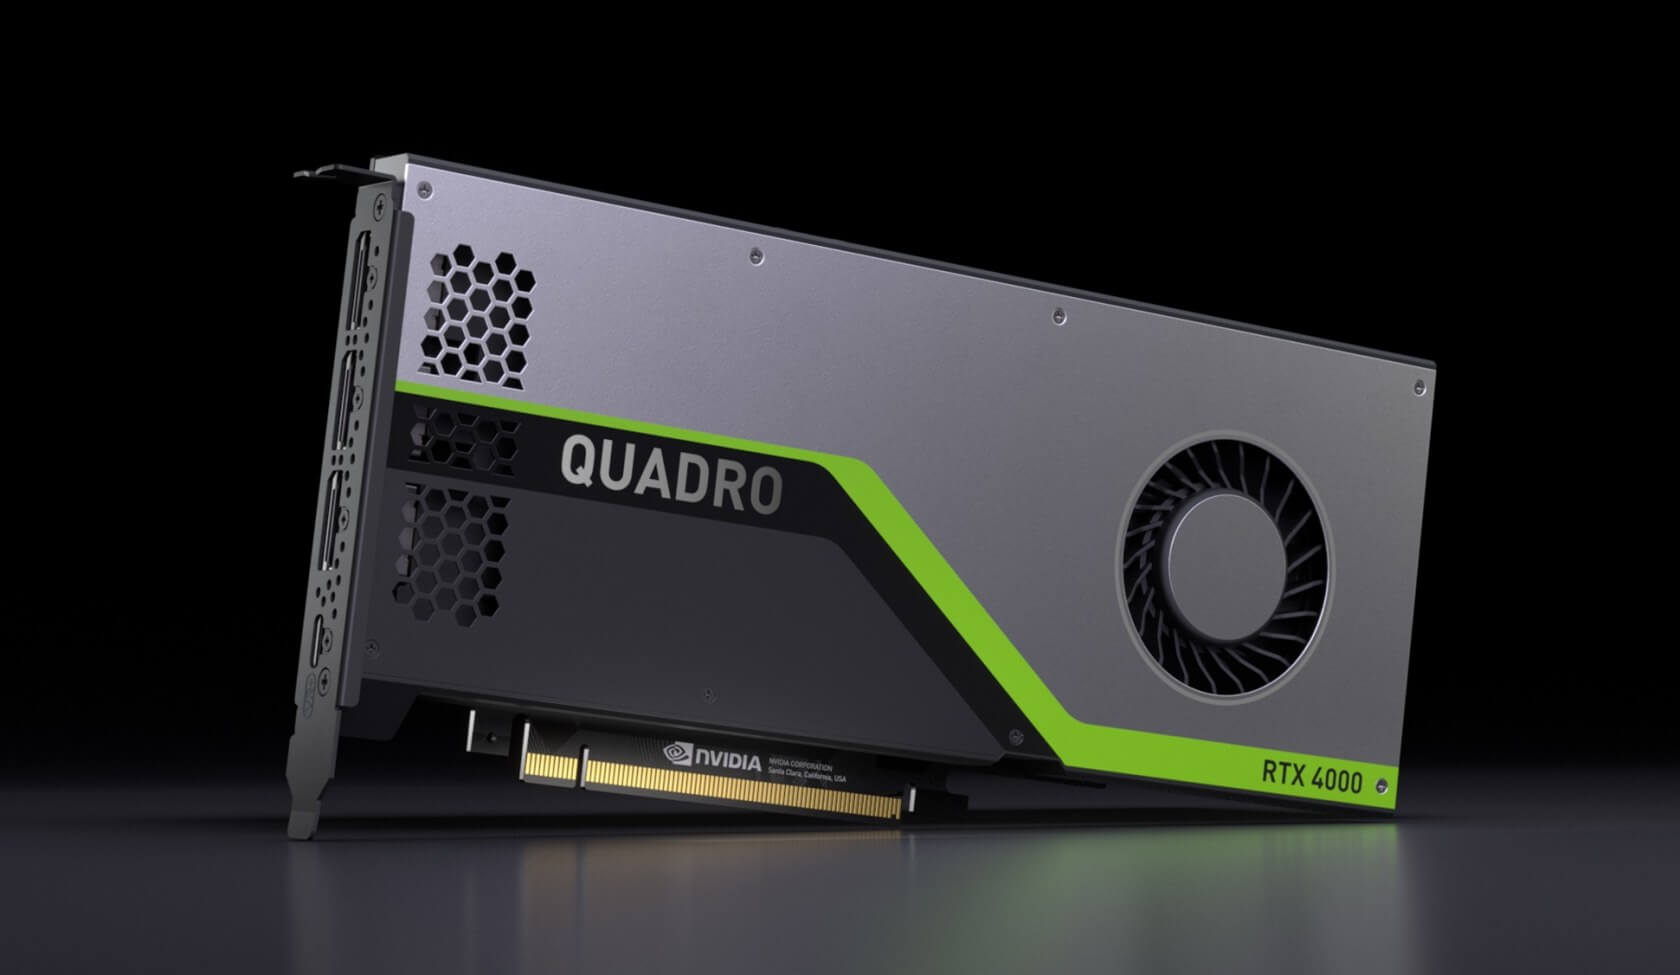 Nvidia reveals the Quadro RTX 4000, its latest budget-friendly workstation GPU